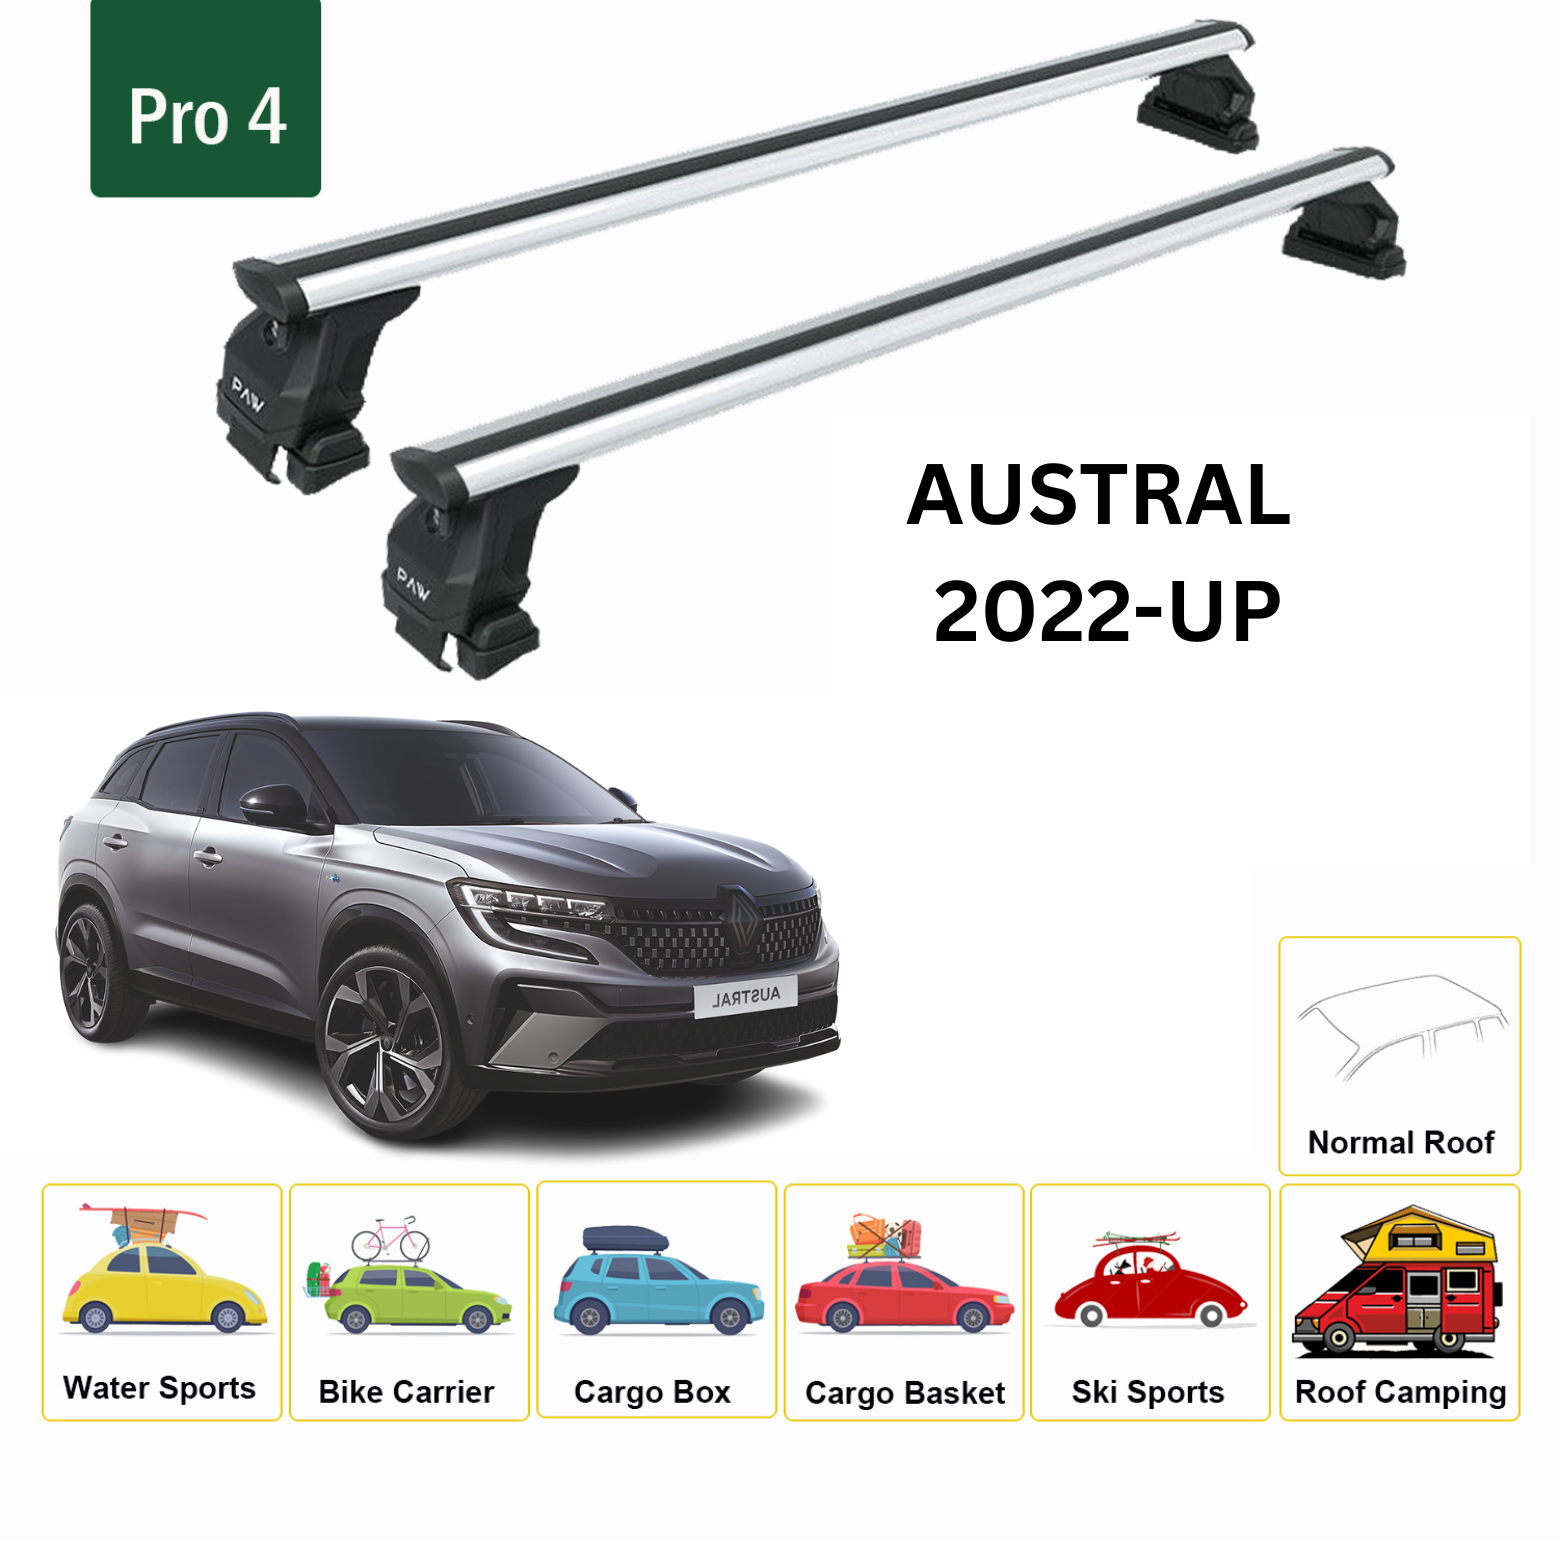 For Renault Austral 2022-Up Roof Rack System, Aluminium Cross Bar, Metal Bracket, Normal Roof, Silver - 0